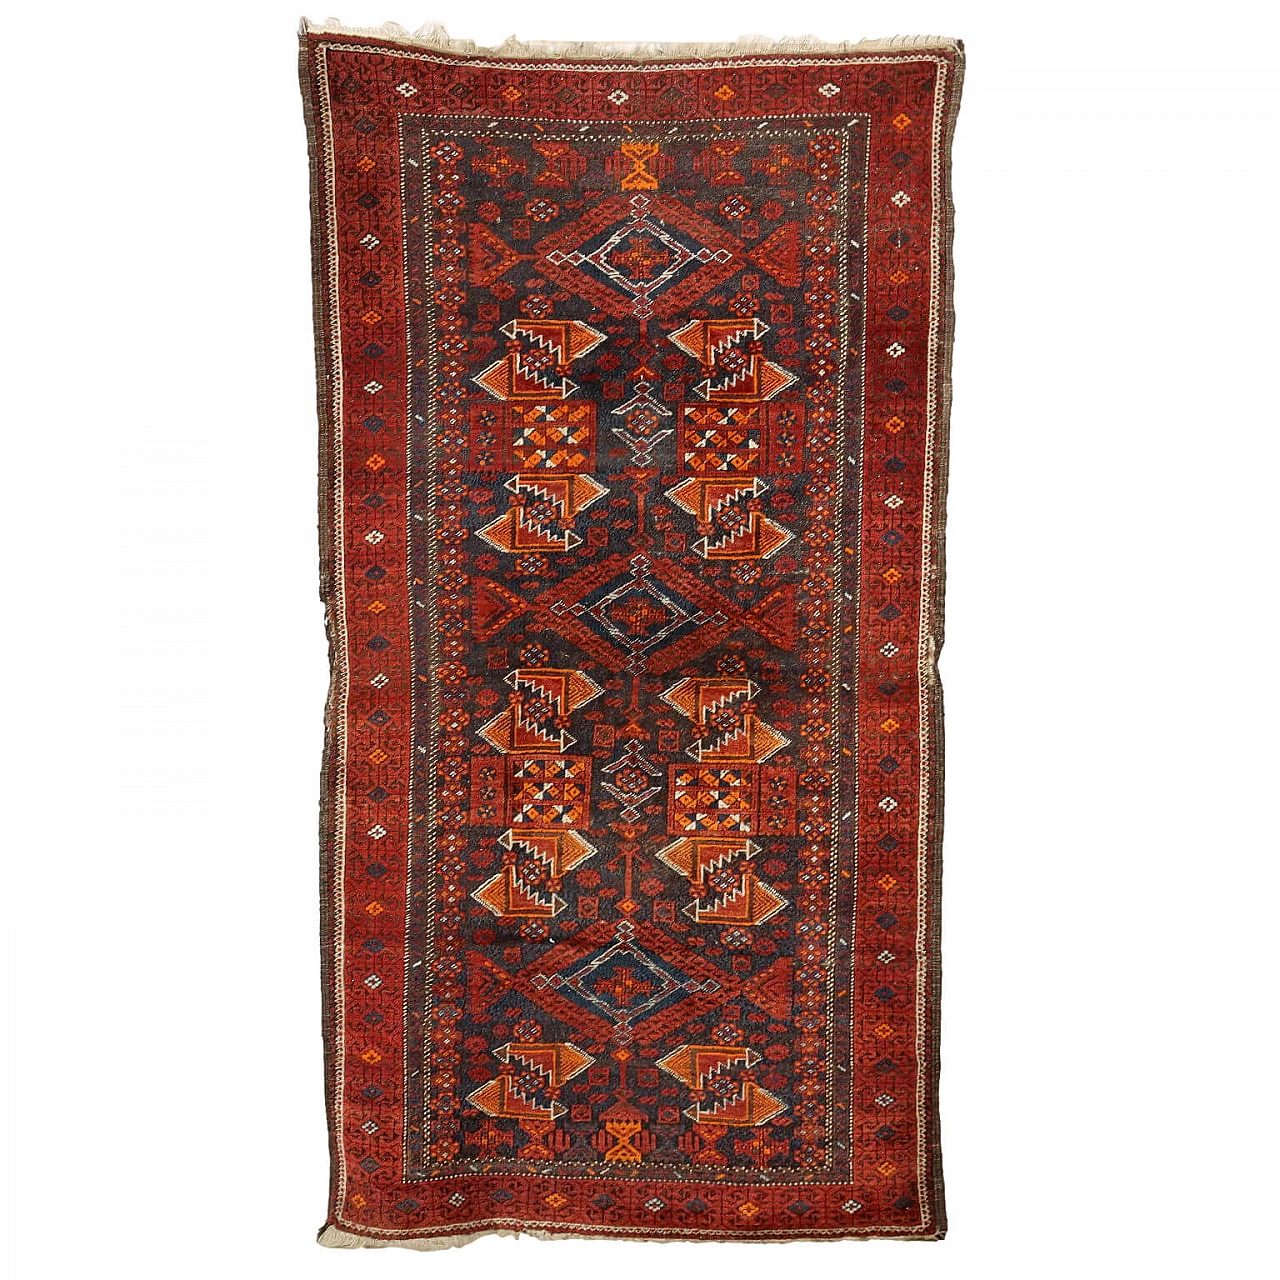 Iranian red, blue and orange wool Beluchi rug 1